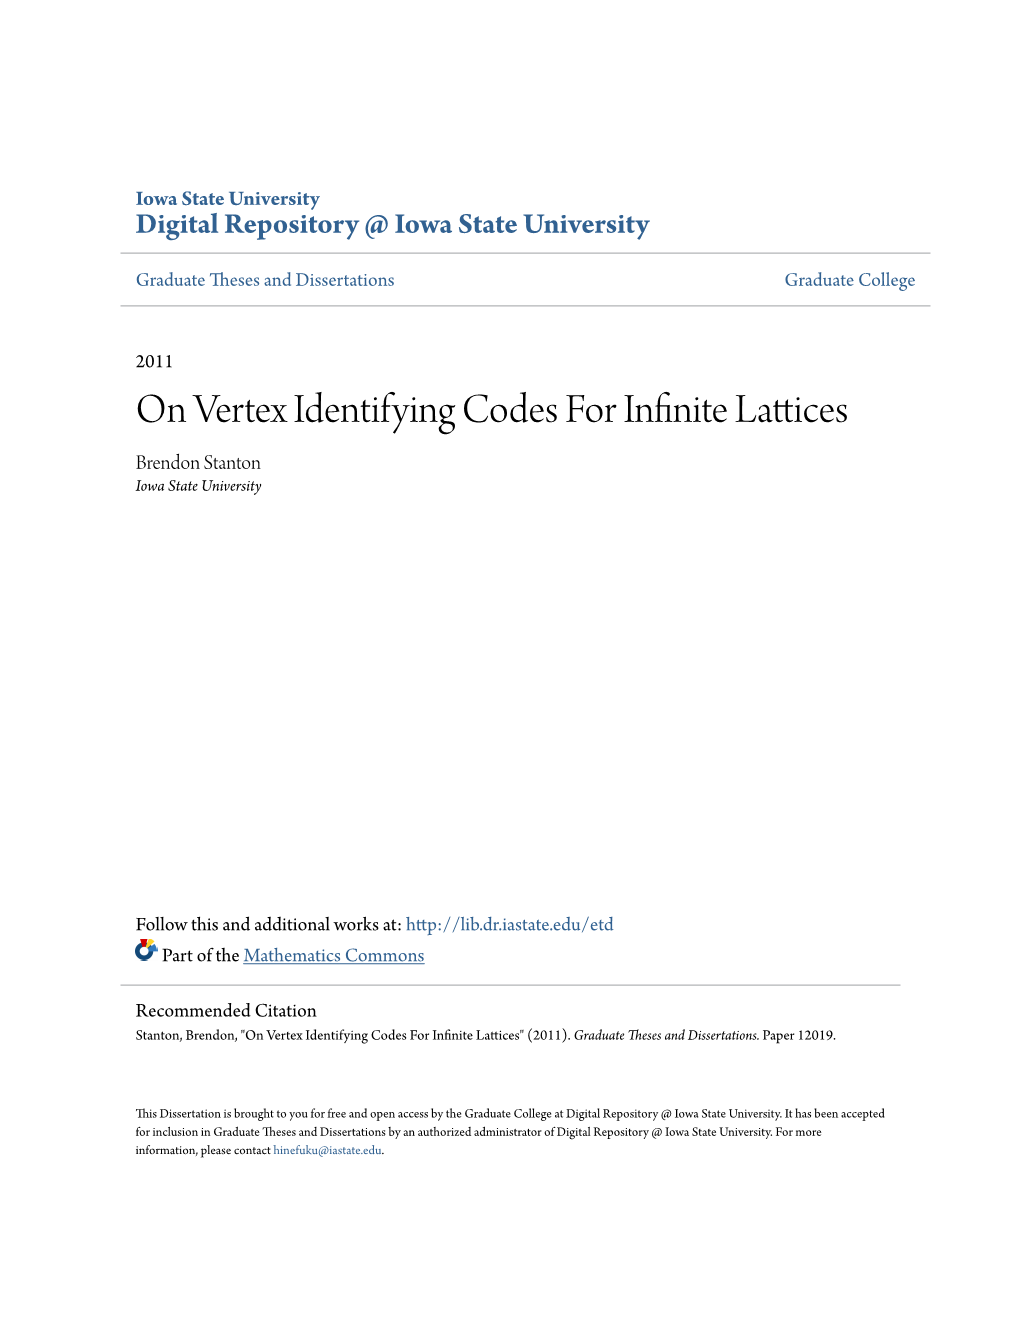 On Vertex Identifying Codes for Infinite Lattices Brendon Stanton Iowa State University